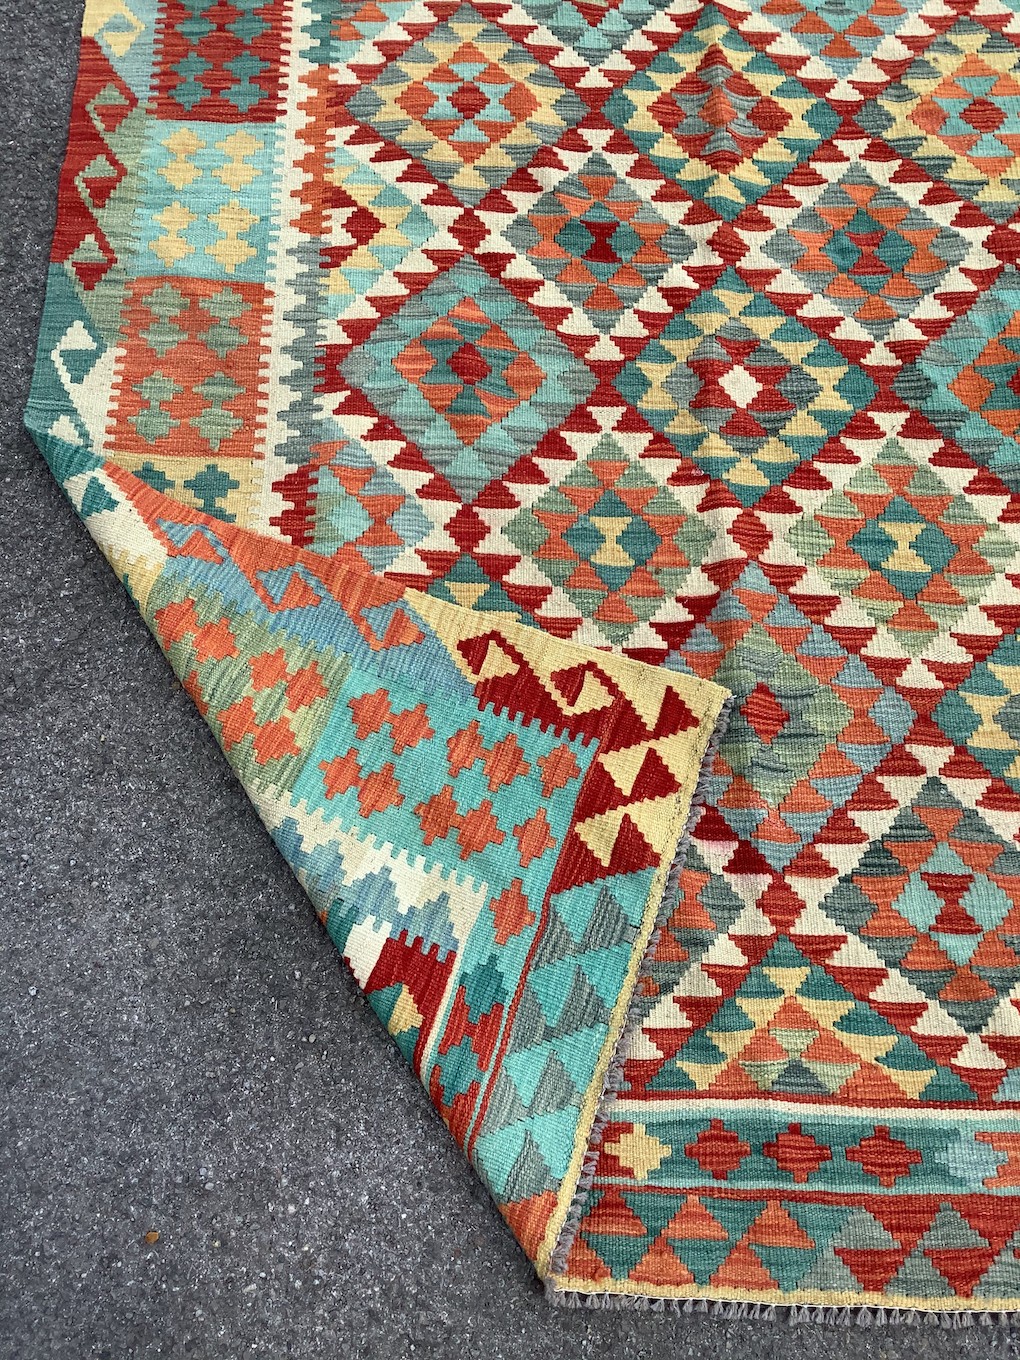 An Anatolian style polychrome Kilim flatweave carpet, 254 x 185cm